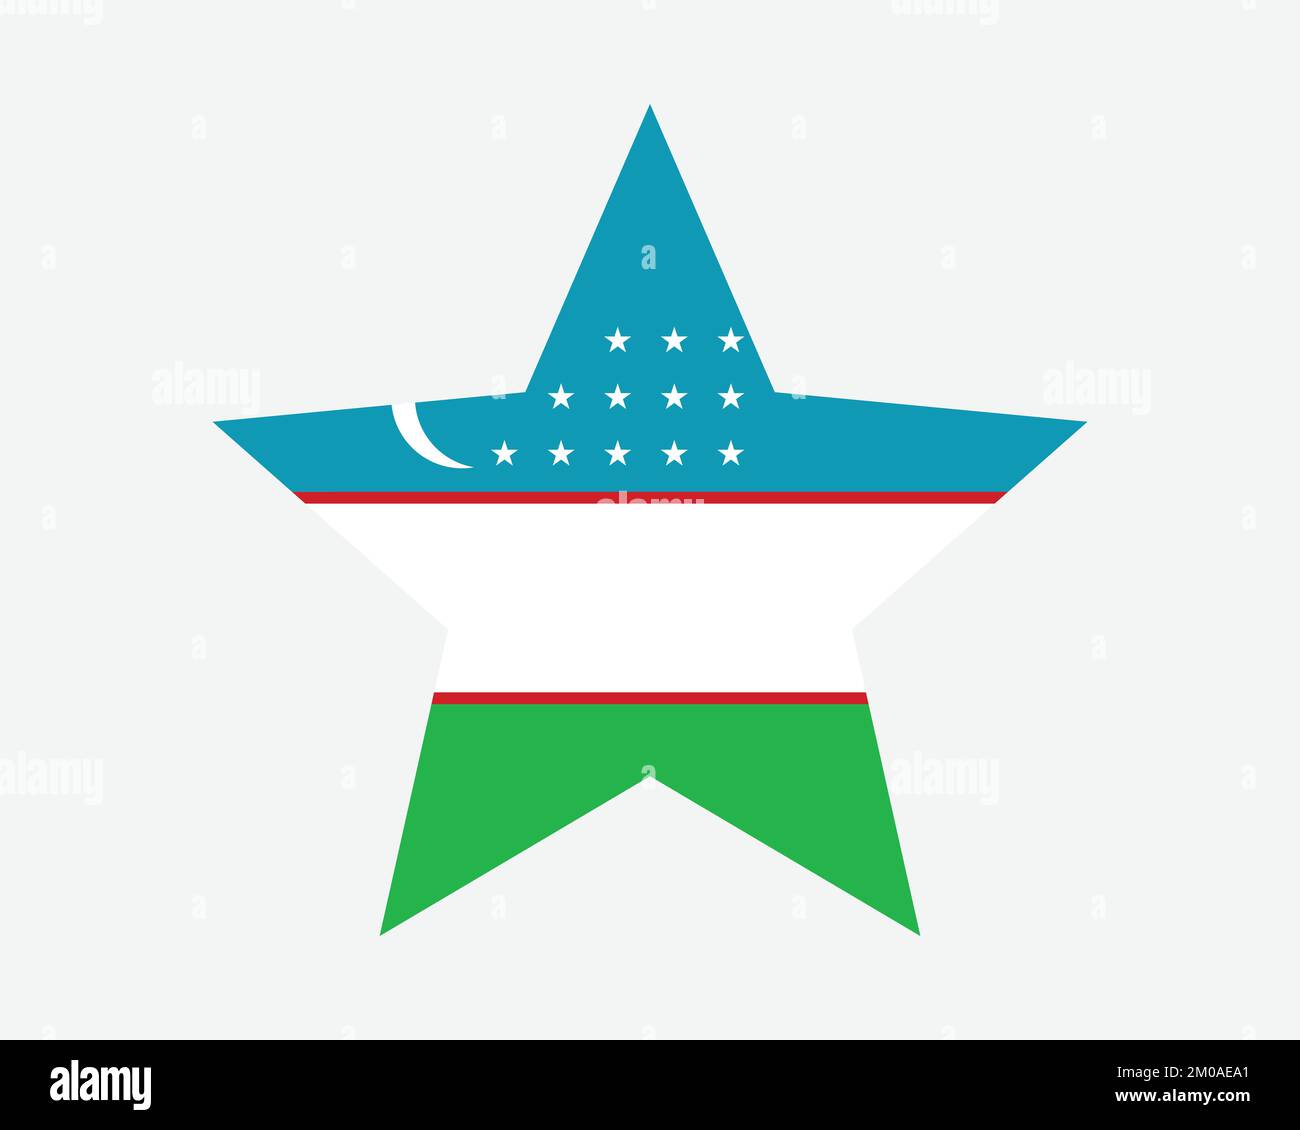 Bandiera Uzbekistan Stella. Bandiera Uzbekistani a forma di stella. Uzbekistan Paese Nazionale Banner icona simbolo vettoriale piatta Illustrazione grafica Illustrazione Vettoriale